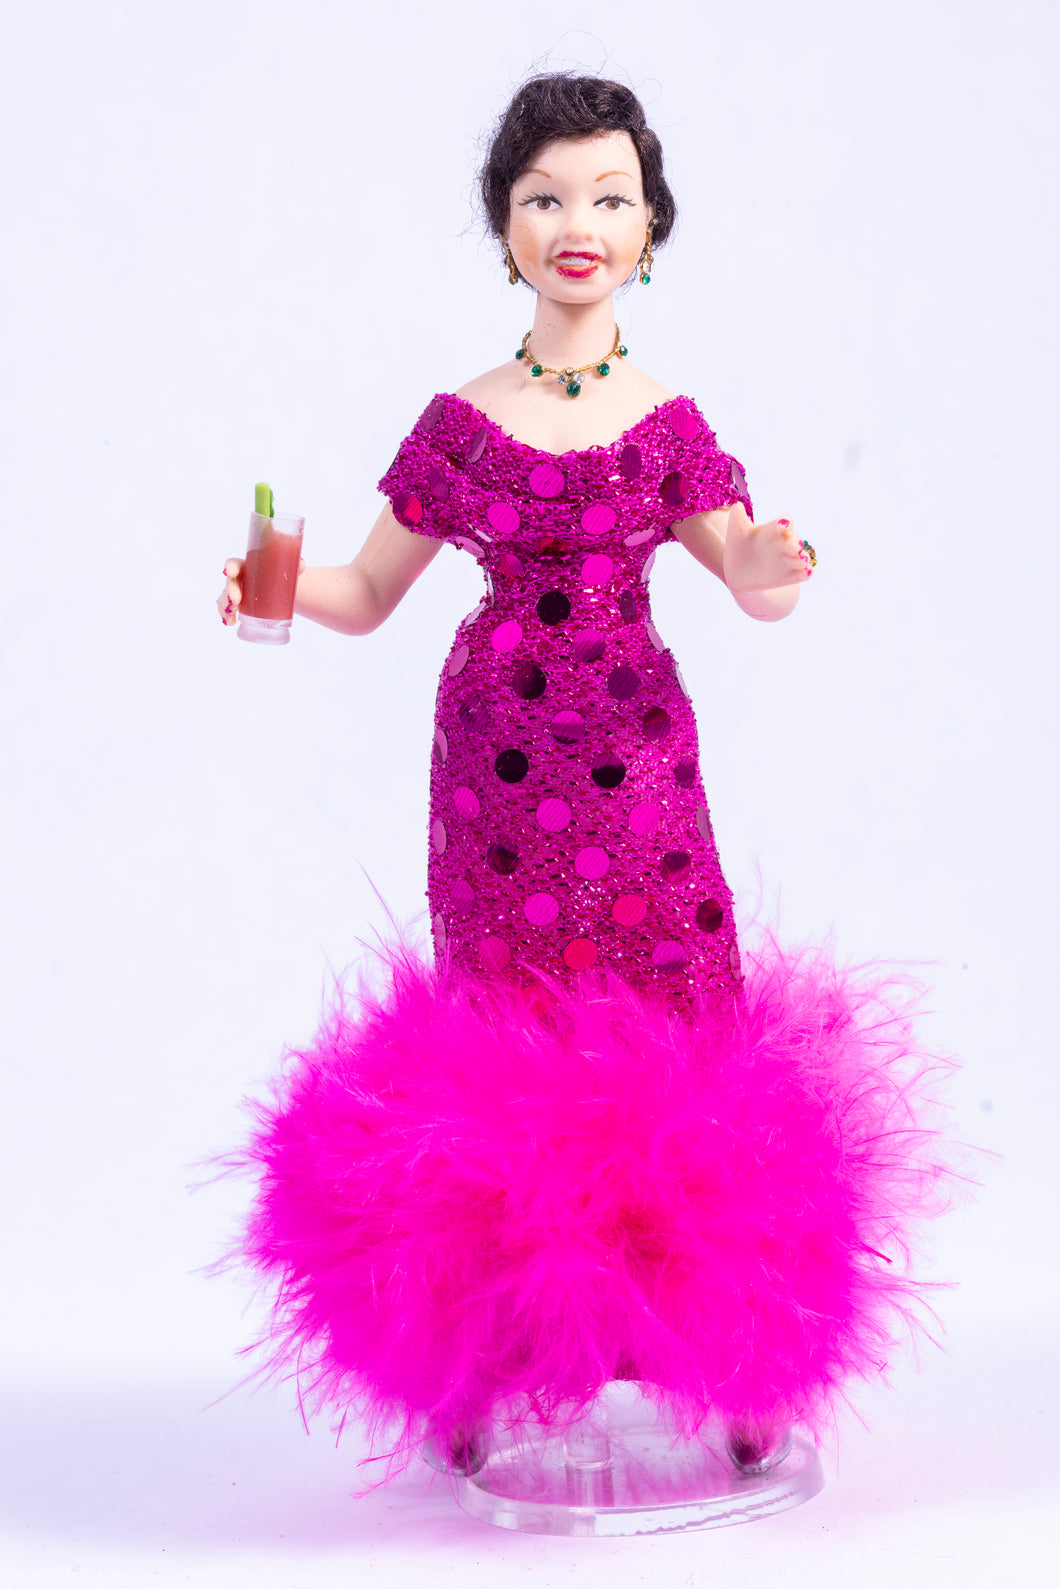 Terrific 1930's Dressed Porcelain Doll - Pink Fuschia Dress with IGMA Lynn O'Shaughnessy Jewelry